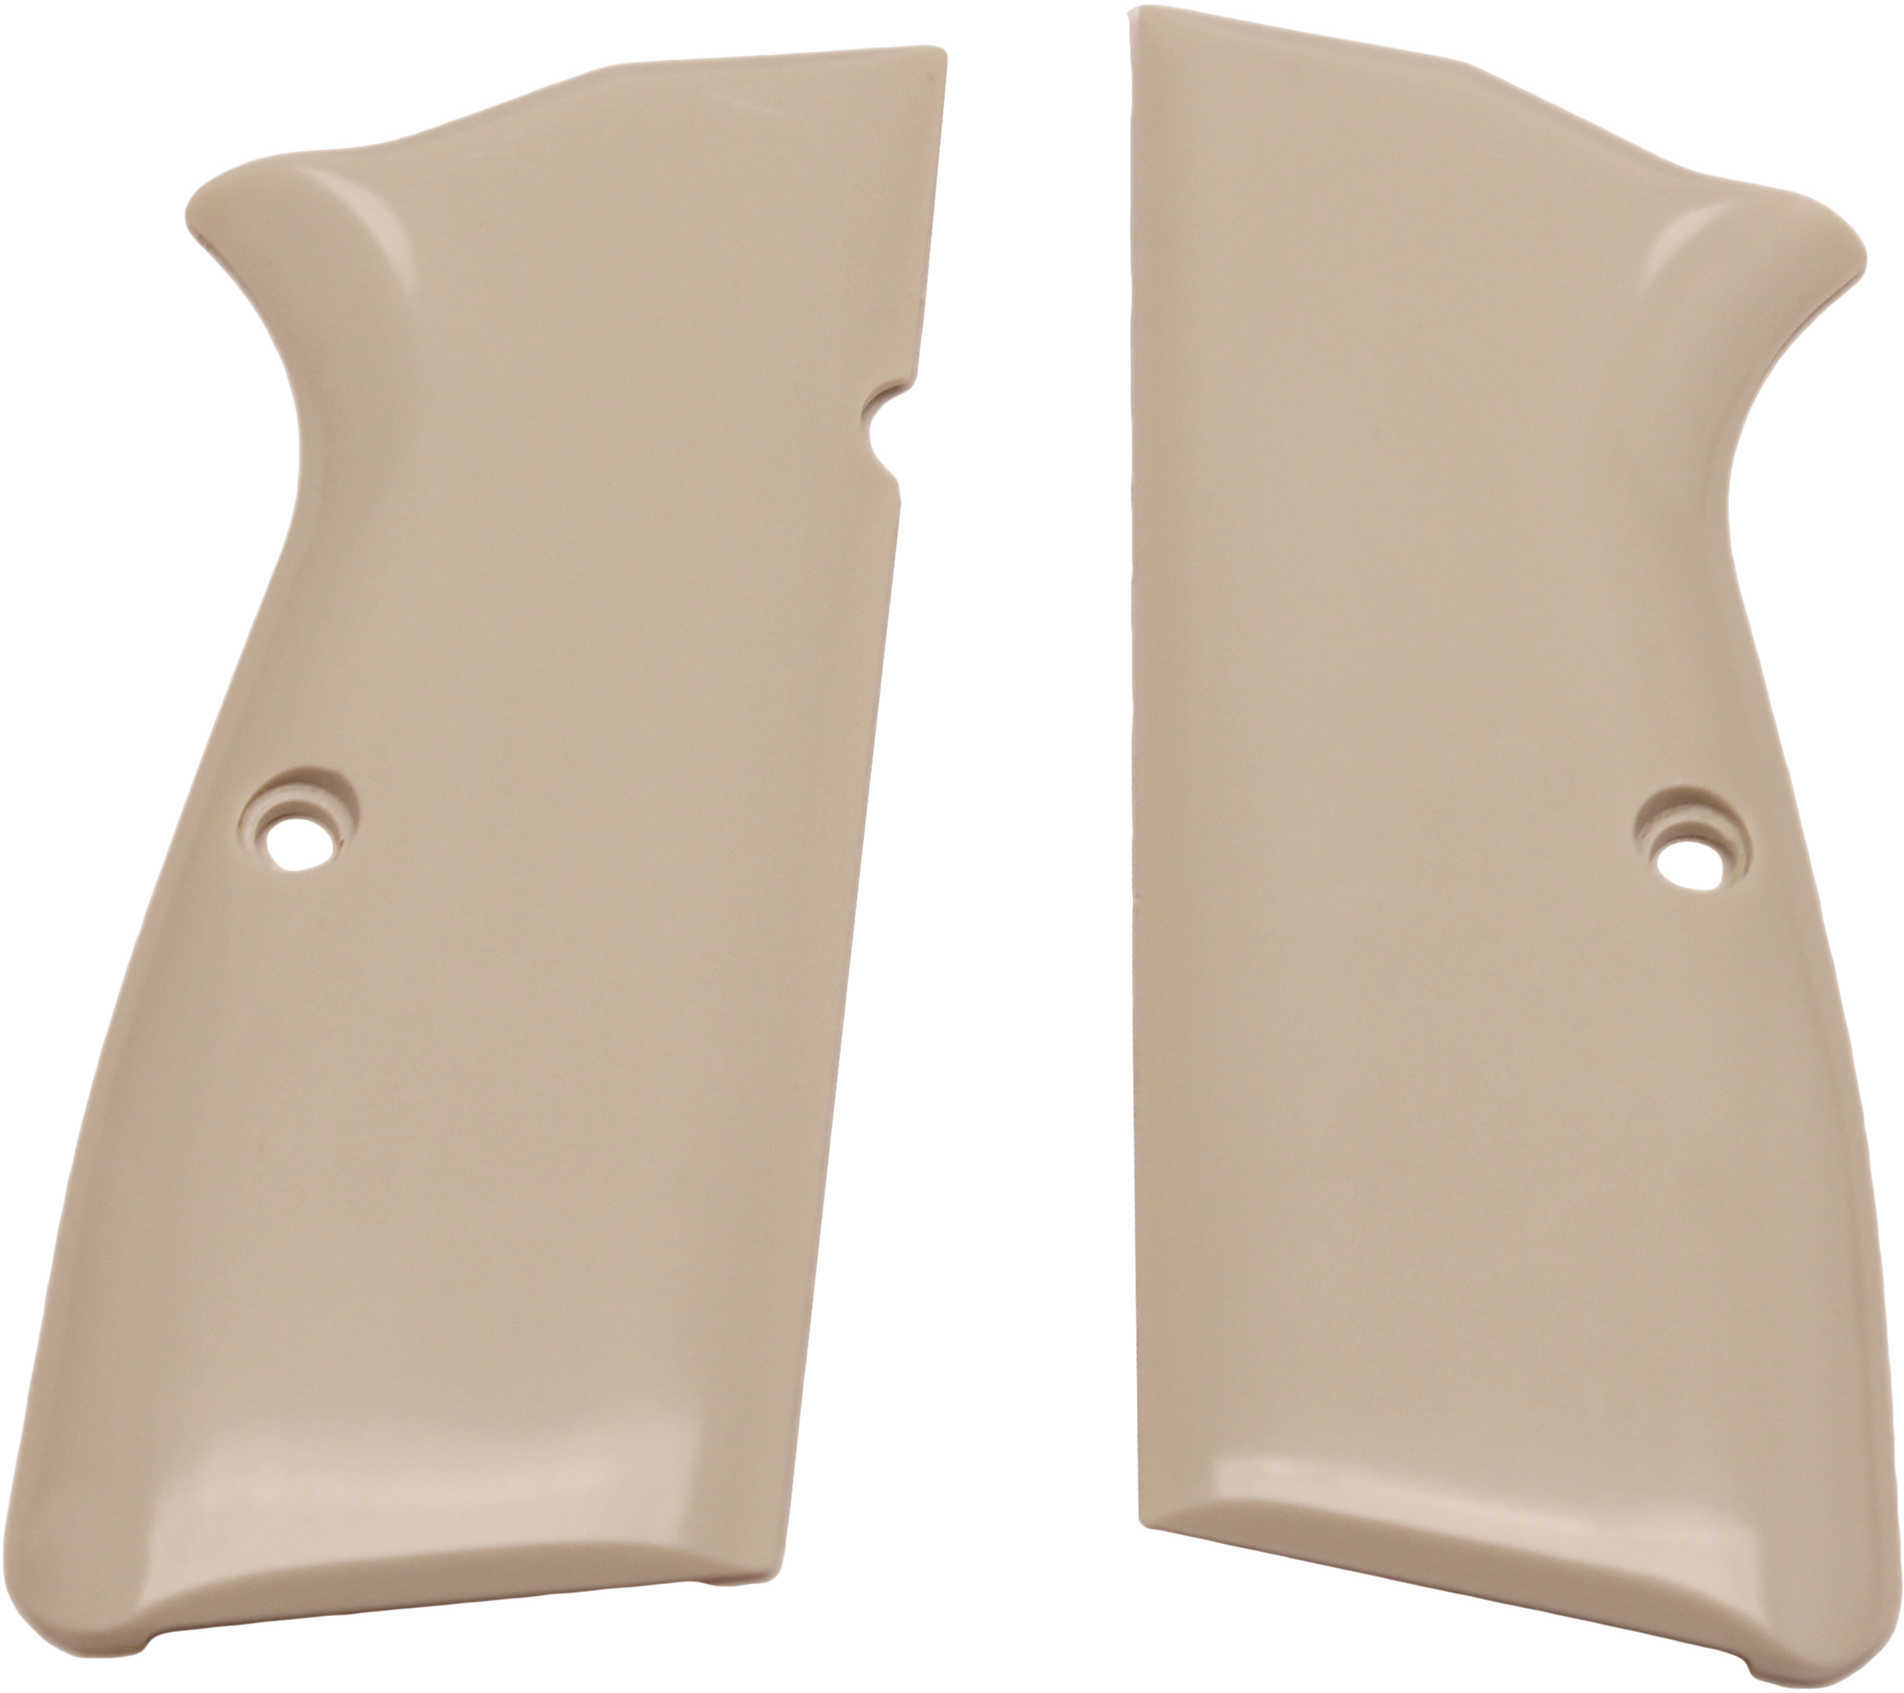 Hogue Browning Hi-Power Scrimshaw Ivory Polymer Grip Panels 09020